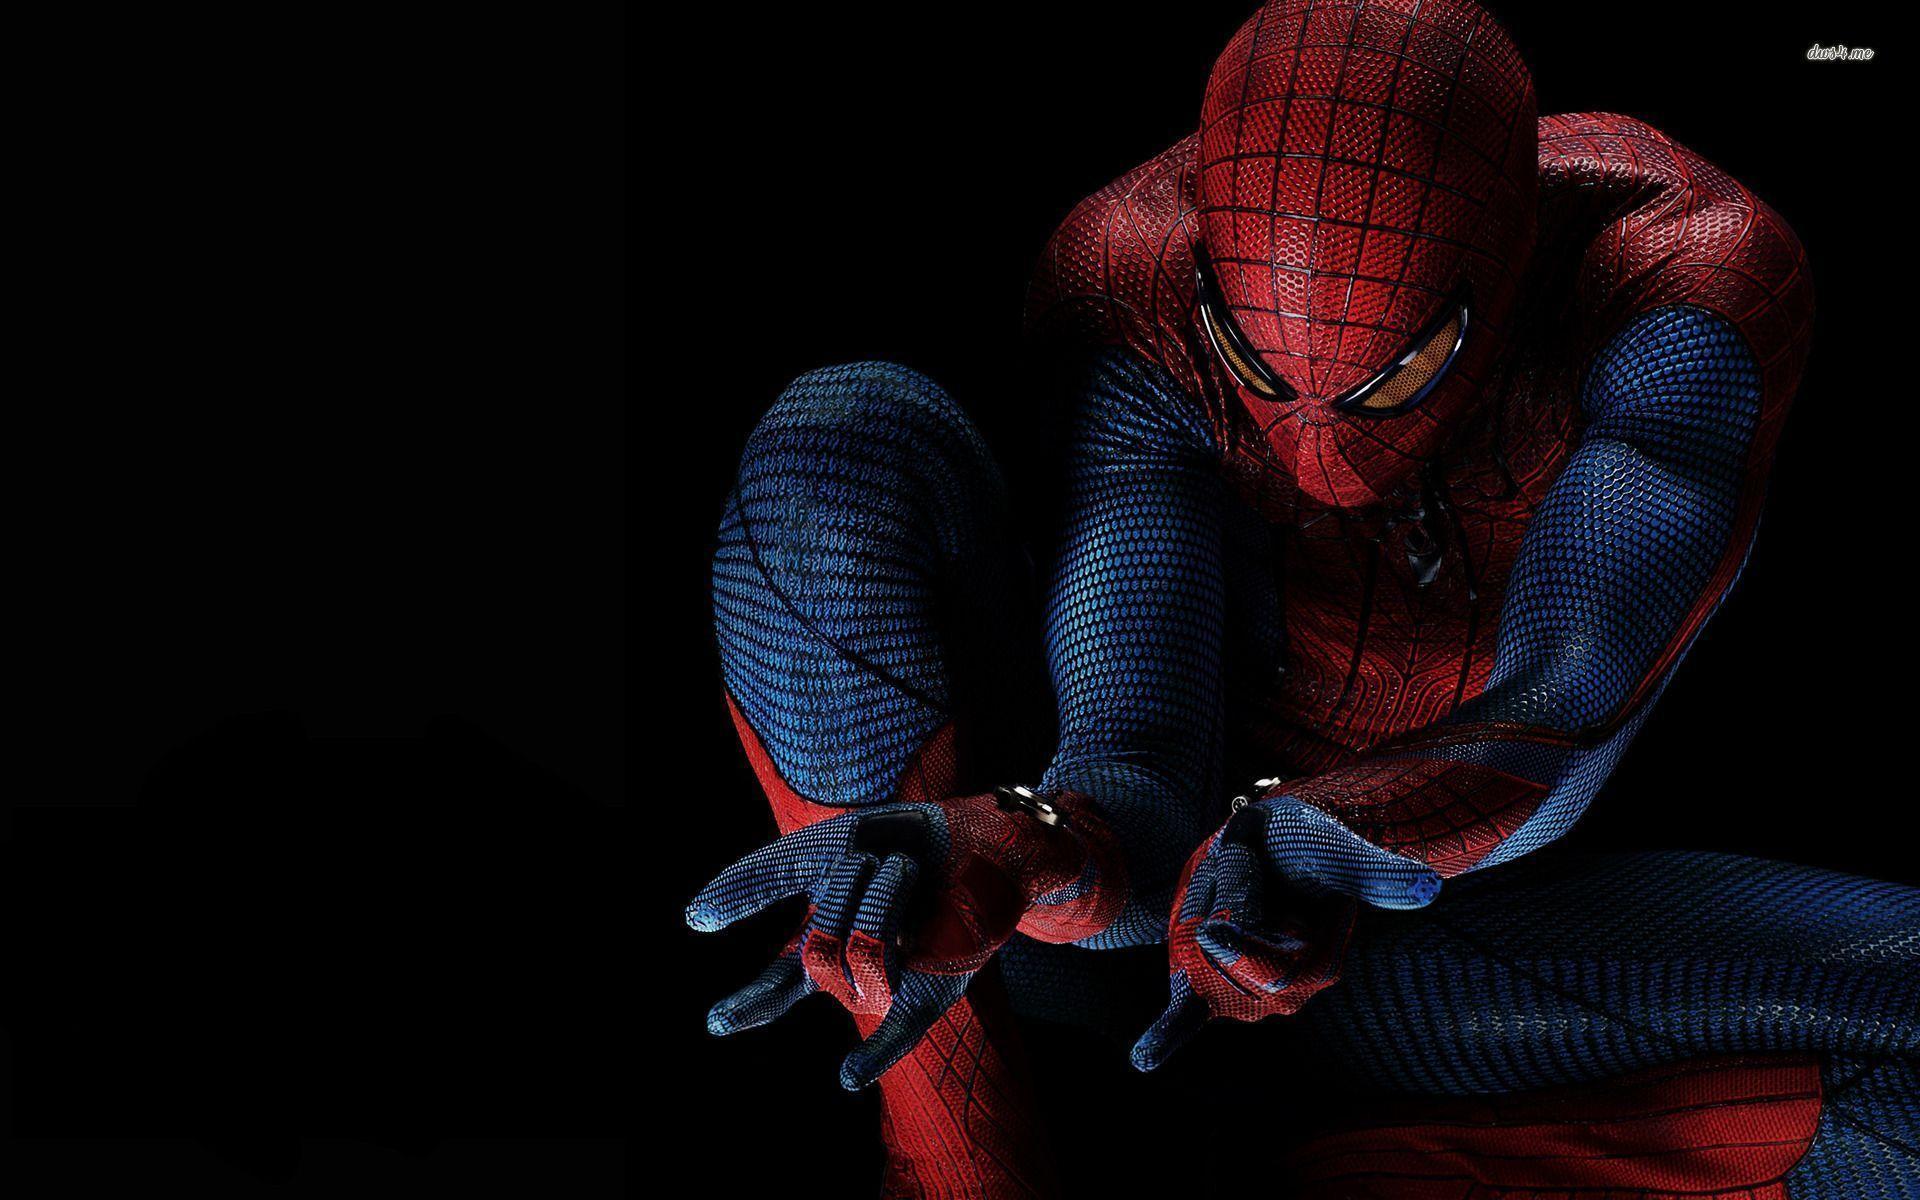 The Amazing Spider Man 2 Wallpaper 1366x768 JPEG Image